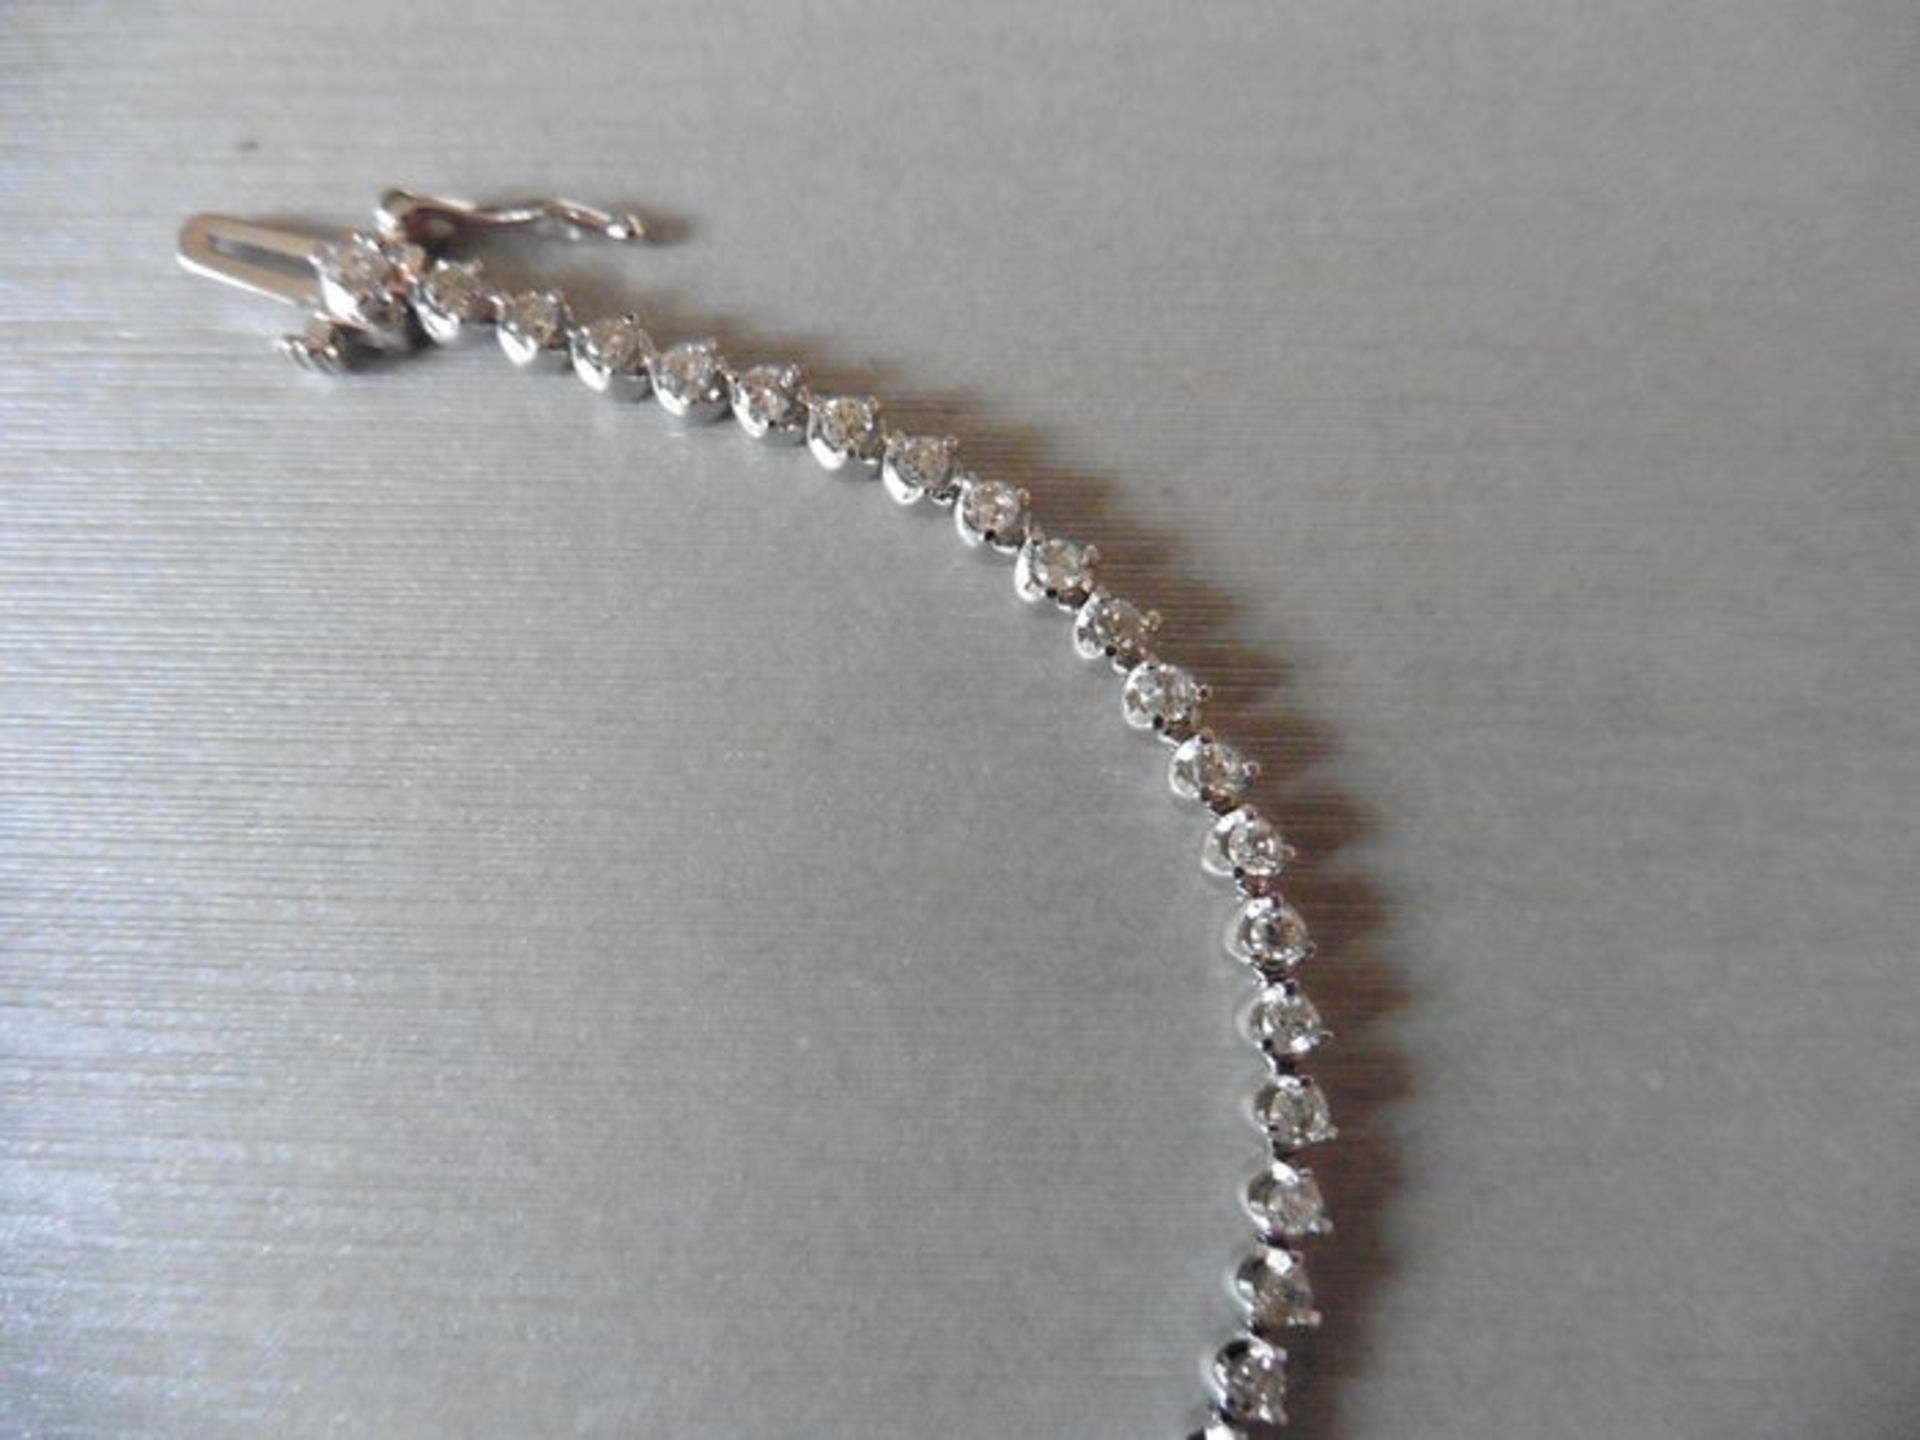 2.70ct diamond tennis bracelet with 60 brilliant cut diamonds - Image 2 of 3